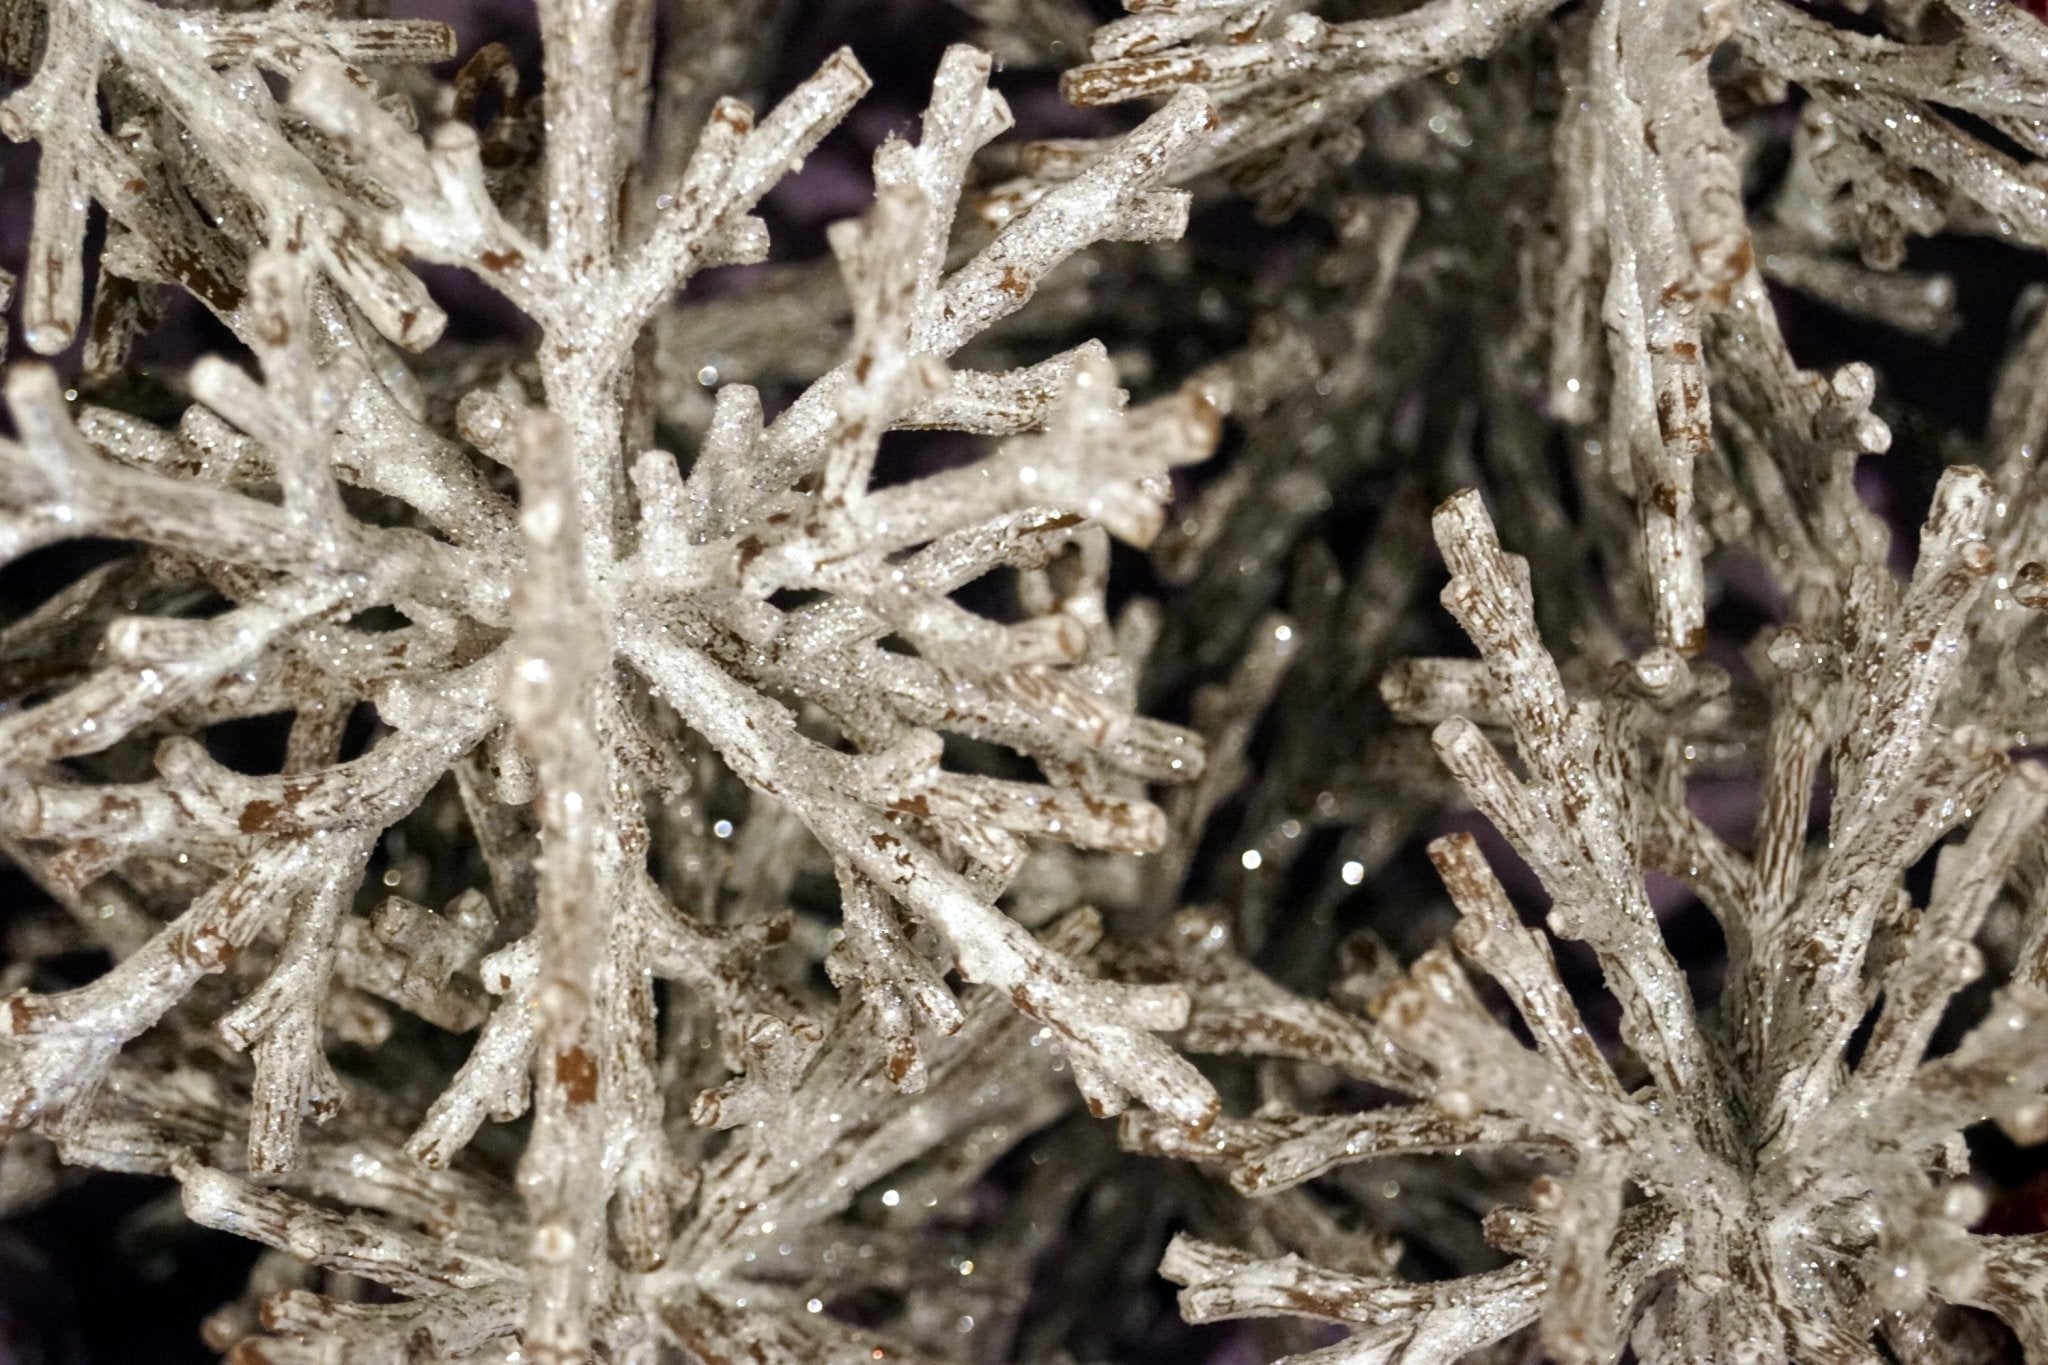 GoodwillTwig snowflake kerstboomhanger 15 cm - Schreuder-kraan.shop